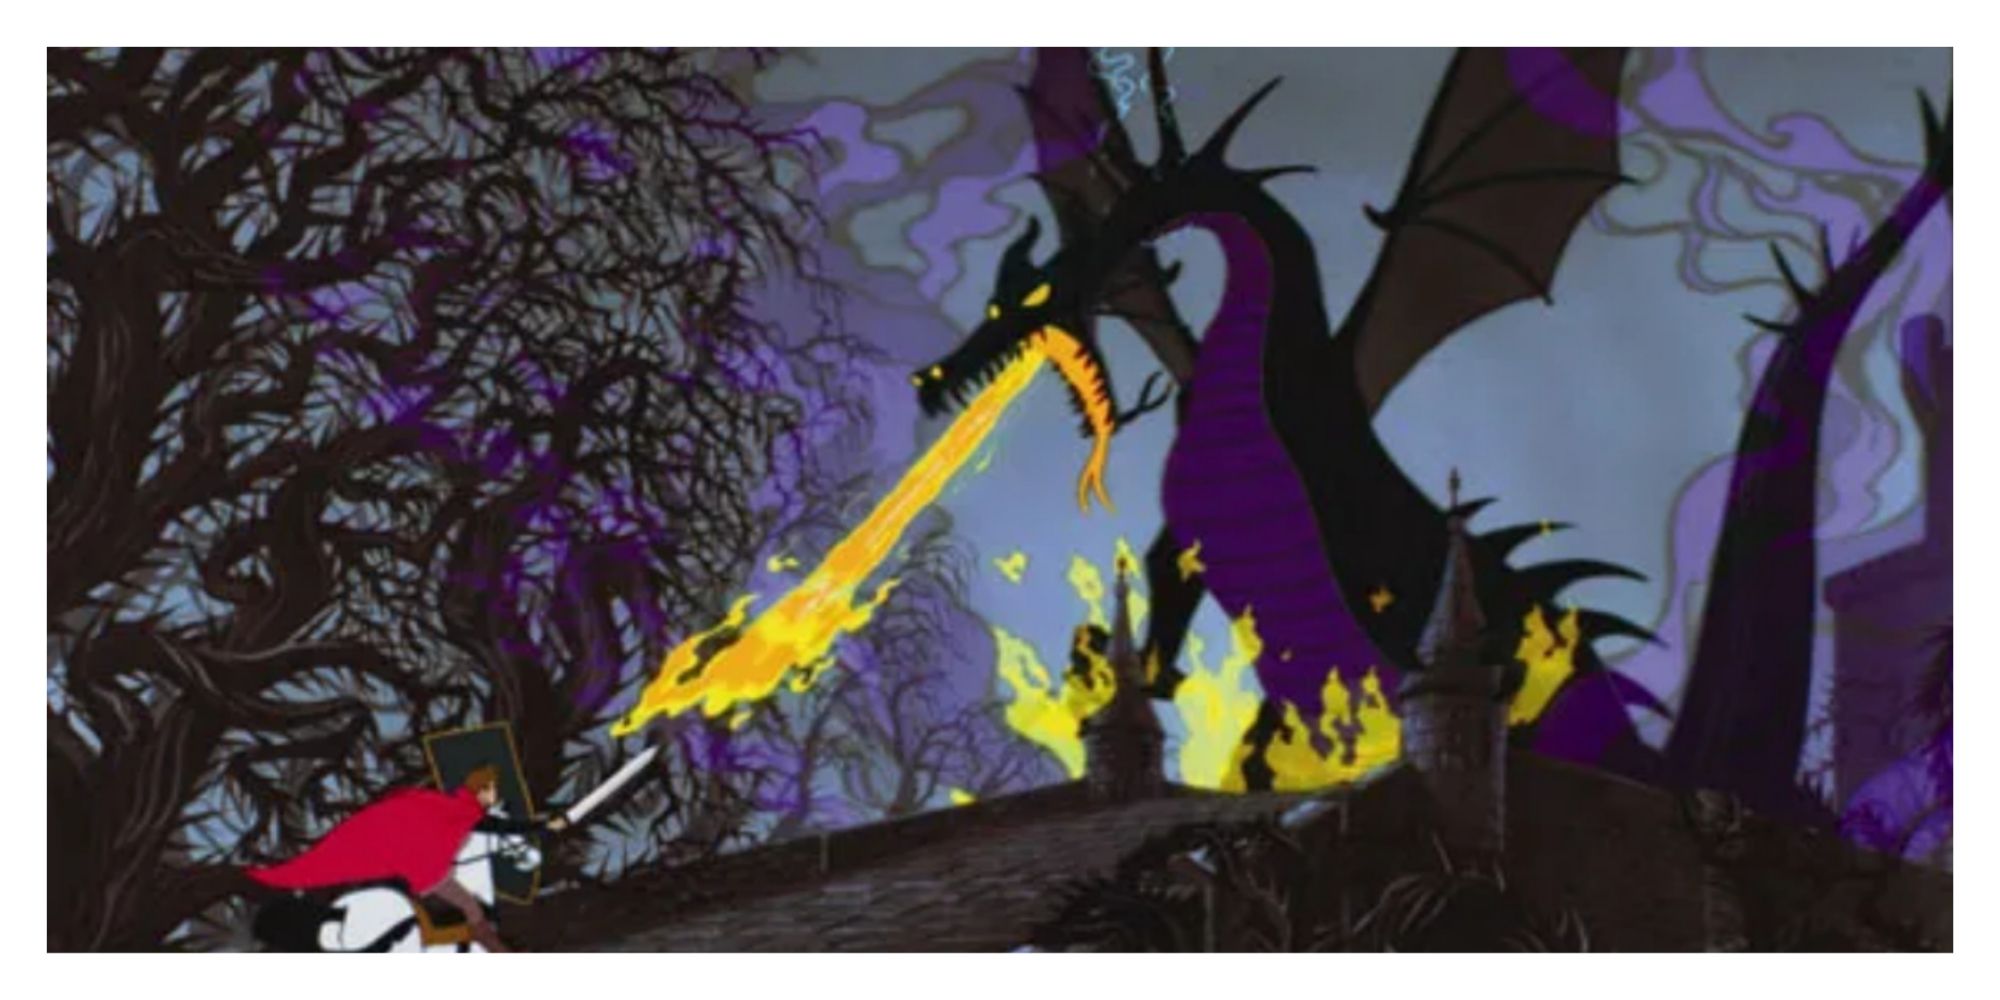 Prince Phillip kills Maleficent as a dragon